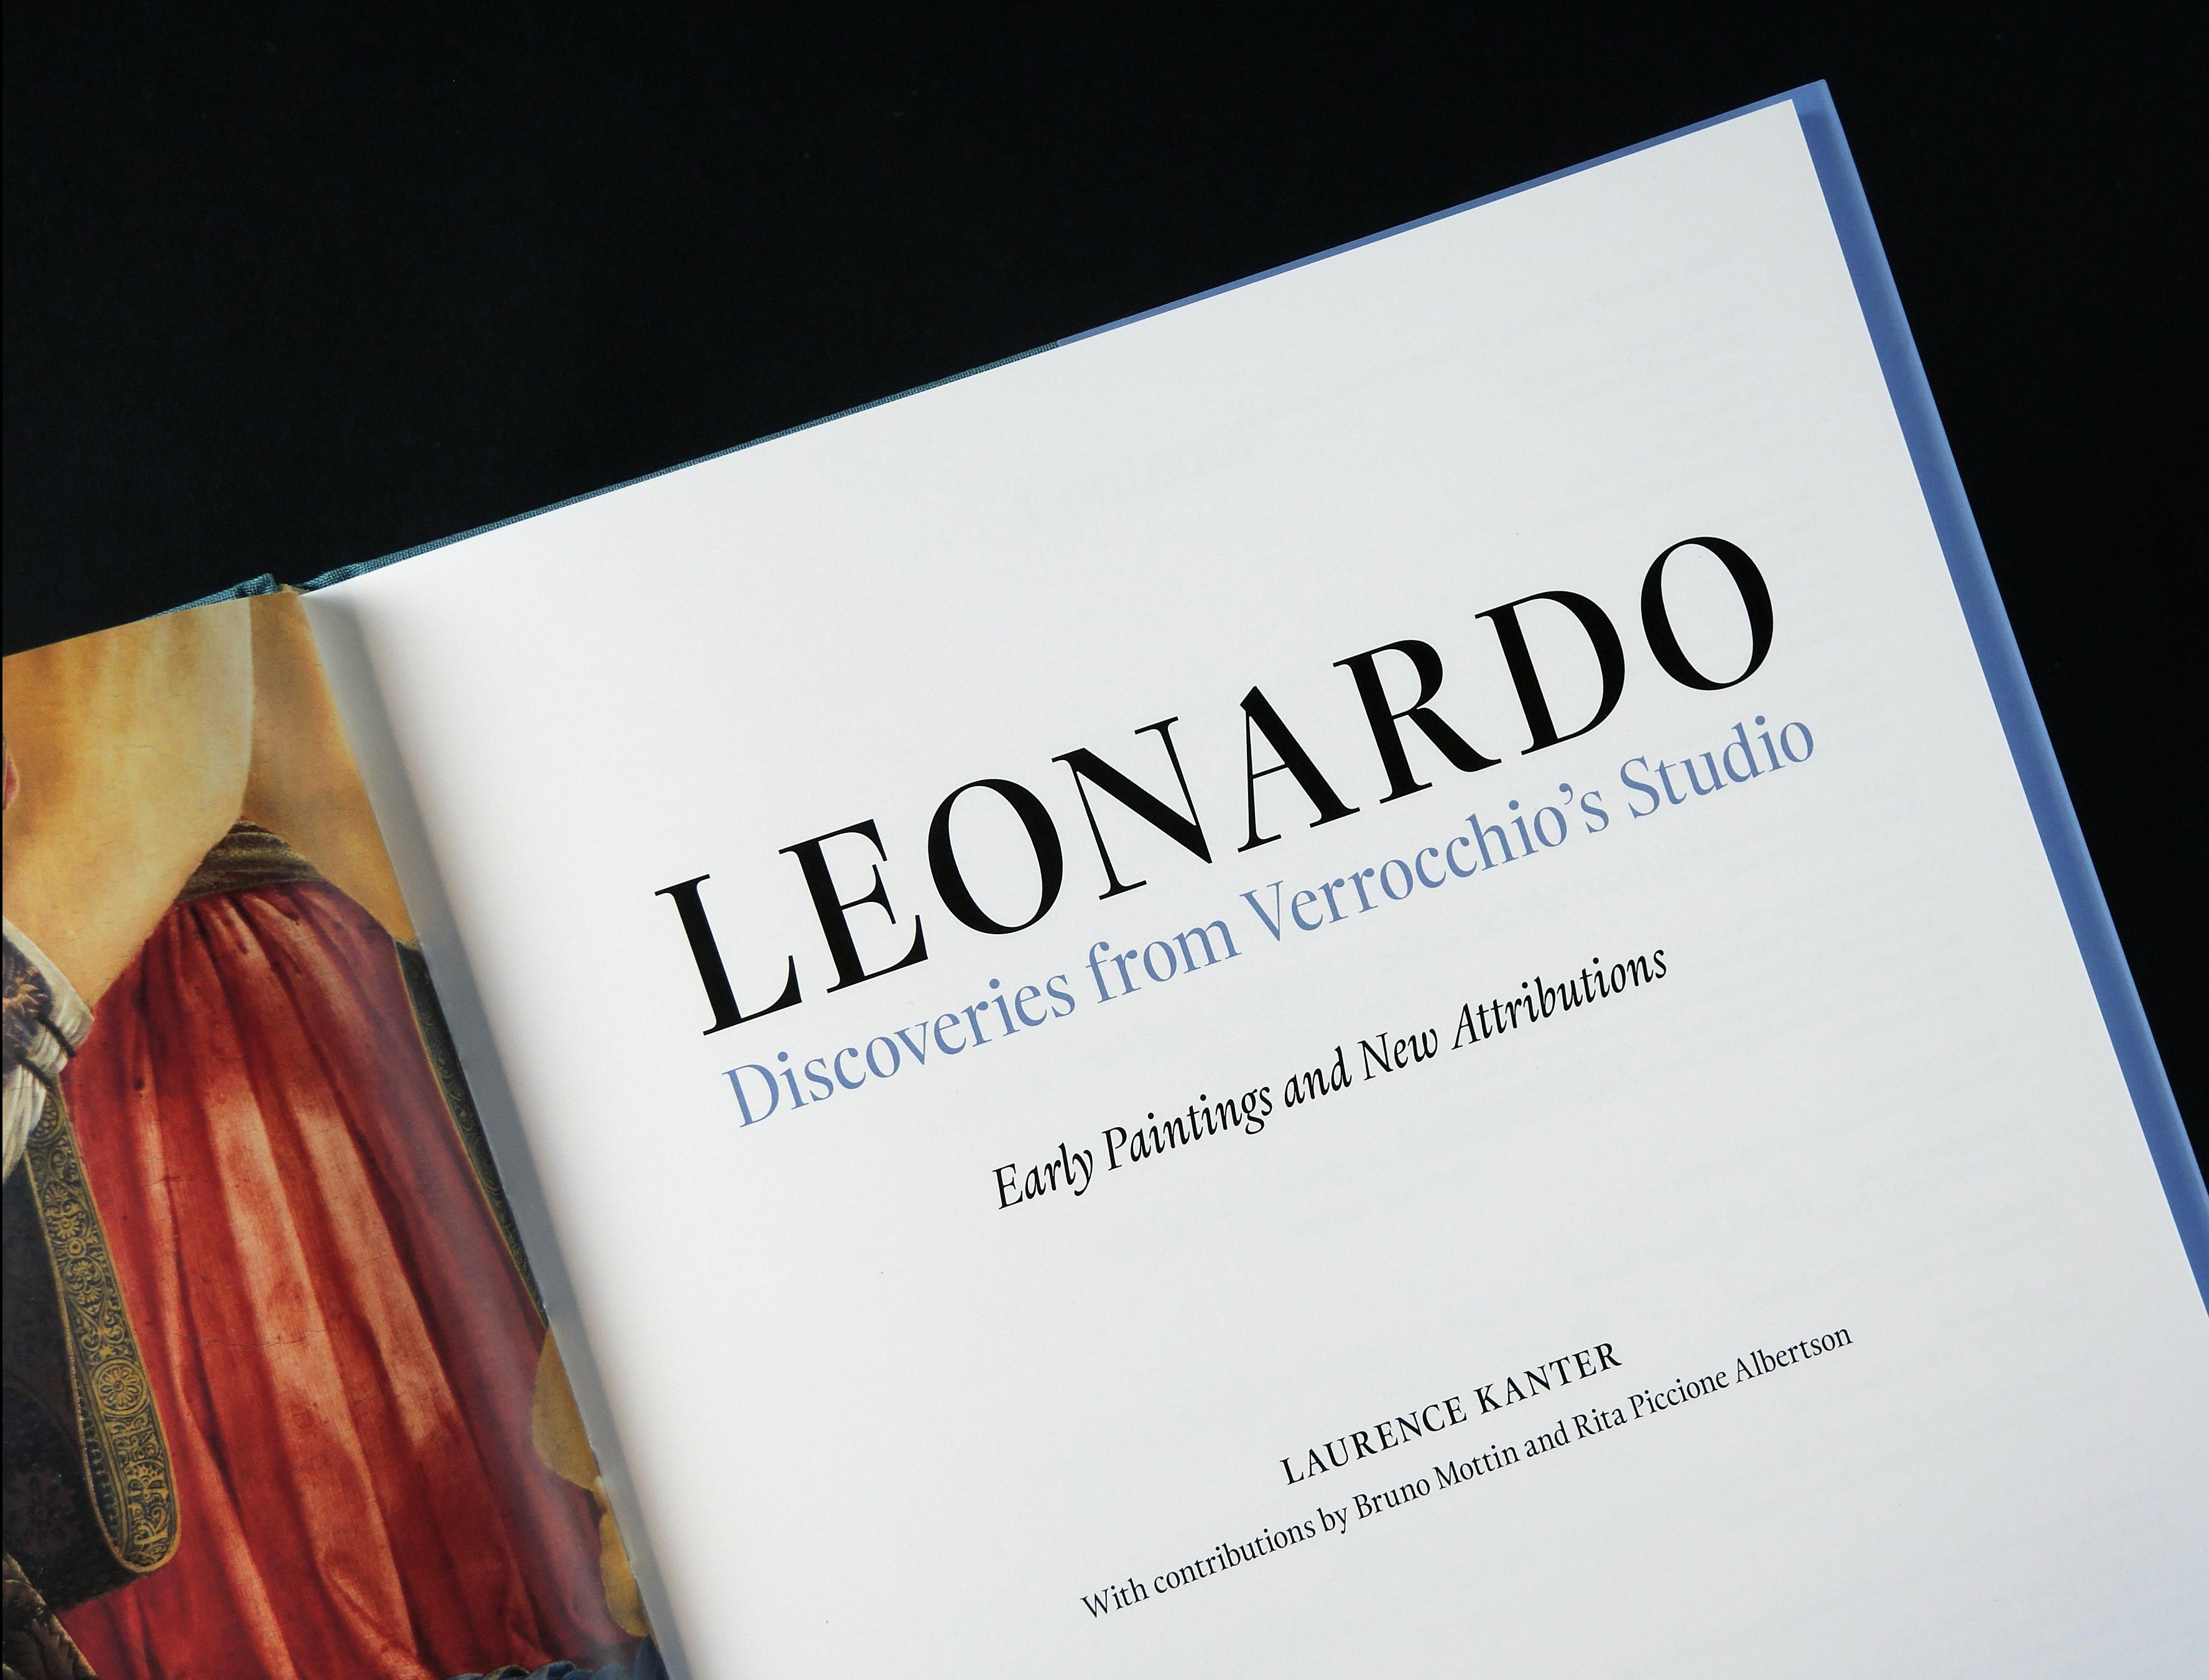 Leonardo Images D